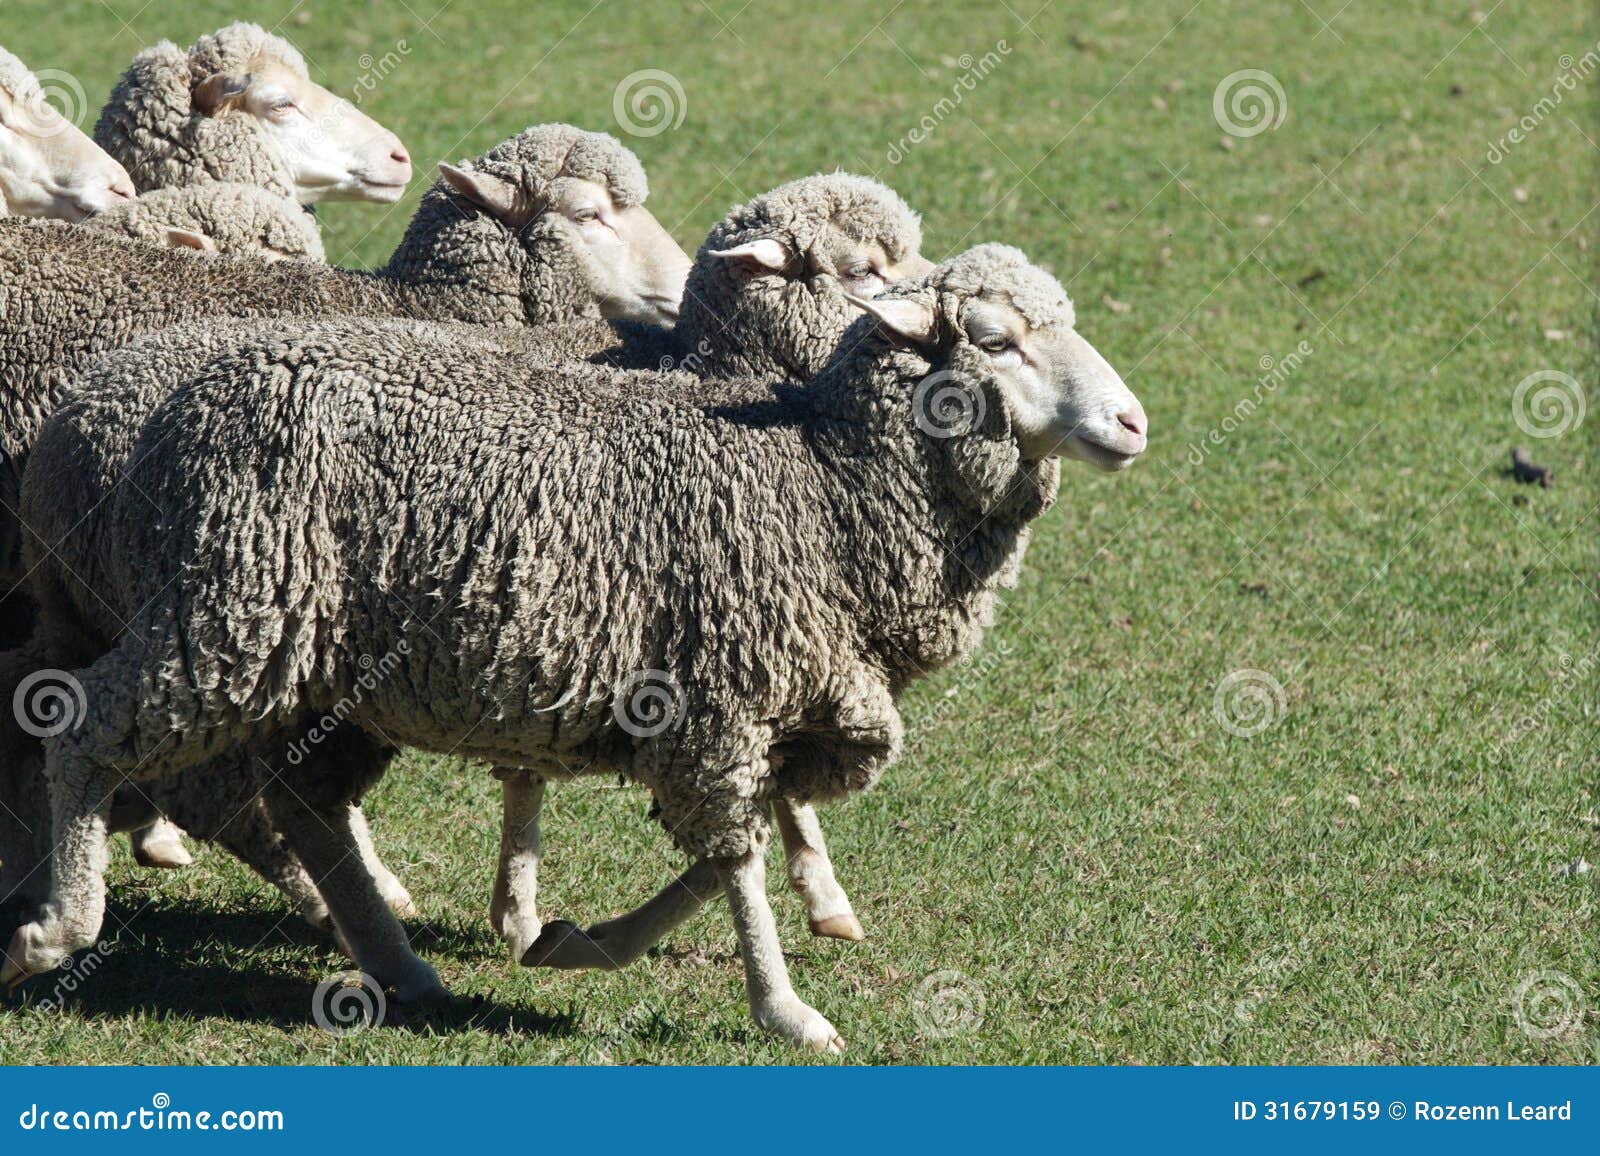 ewe sheep